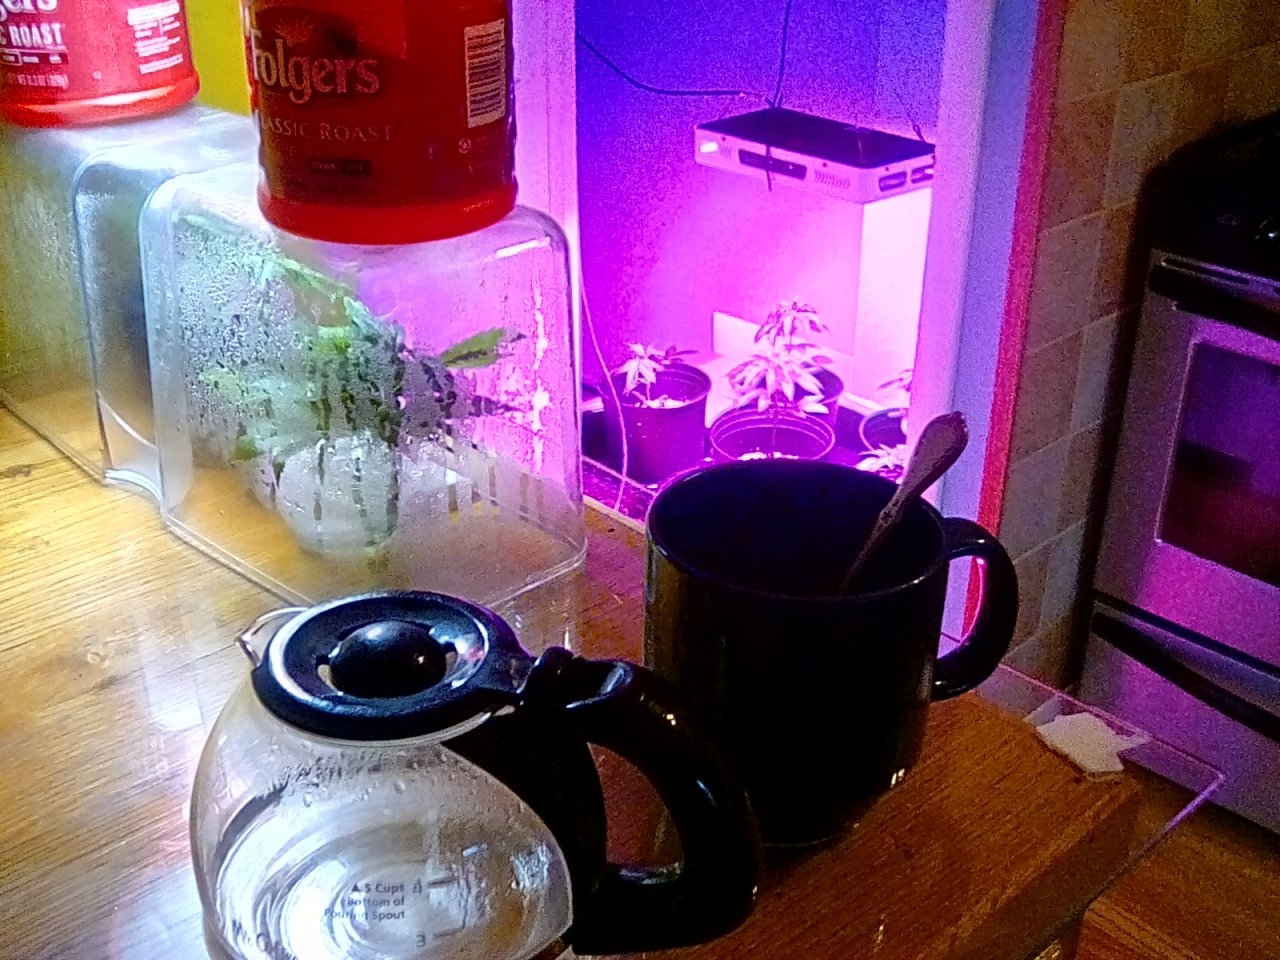 Coffee and vegetative growth.